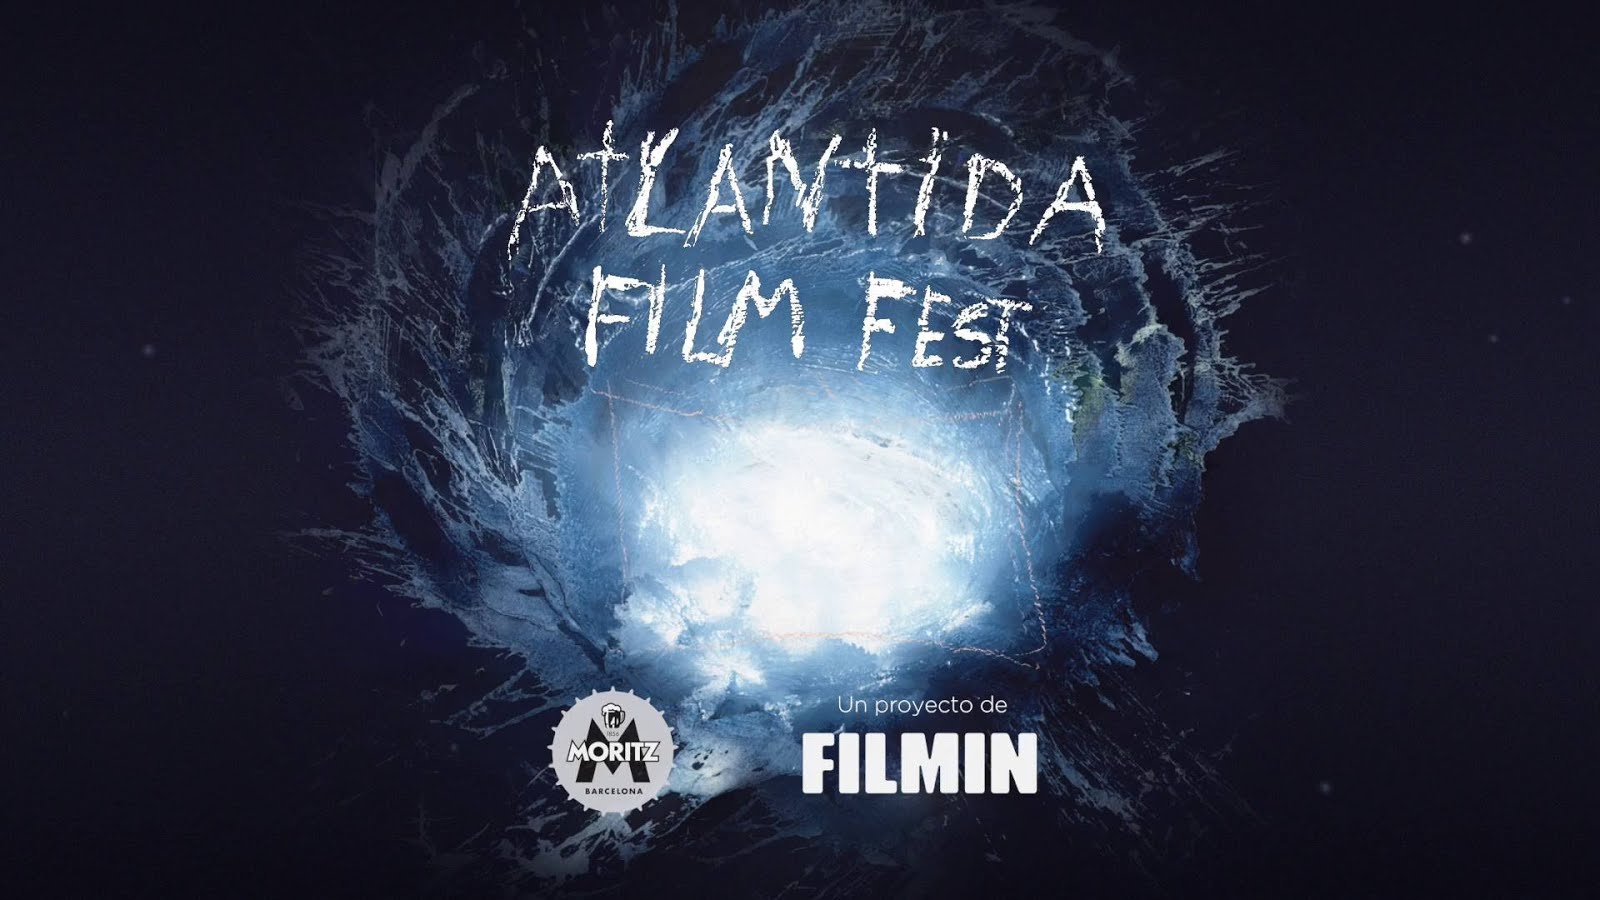 Atlántida Film Fest 2016